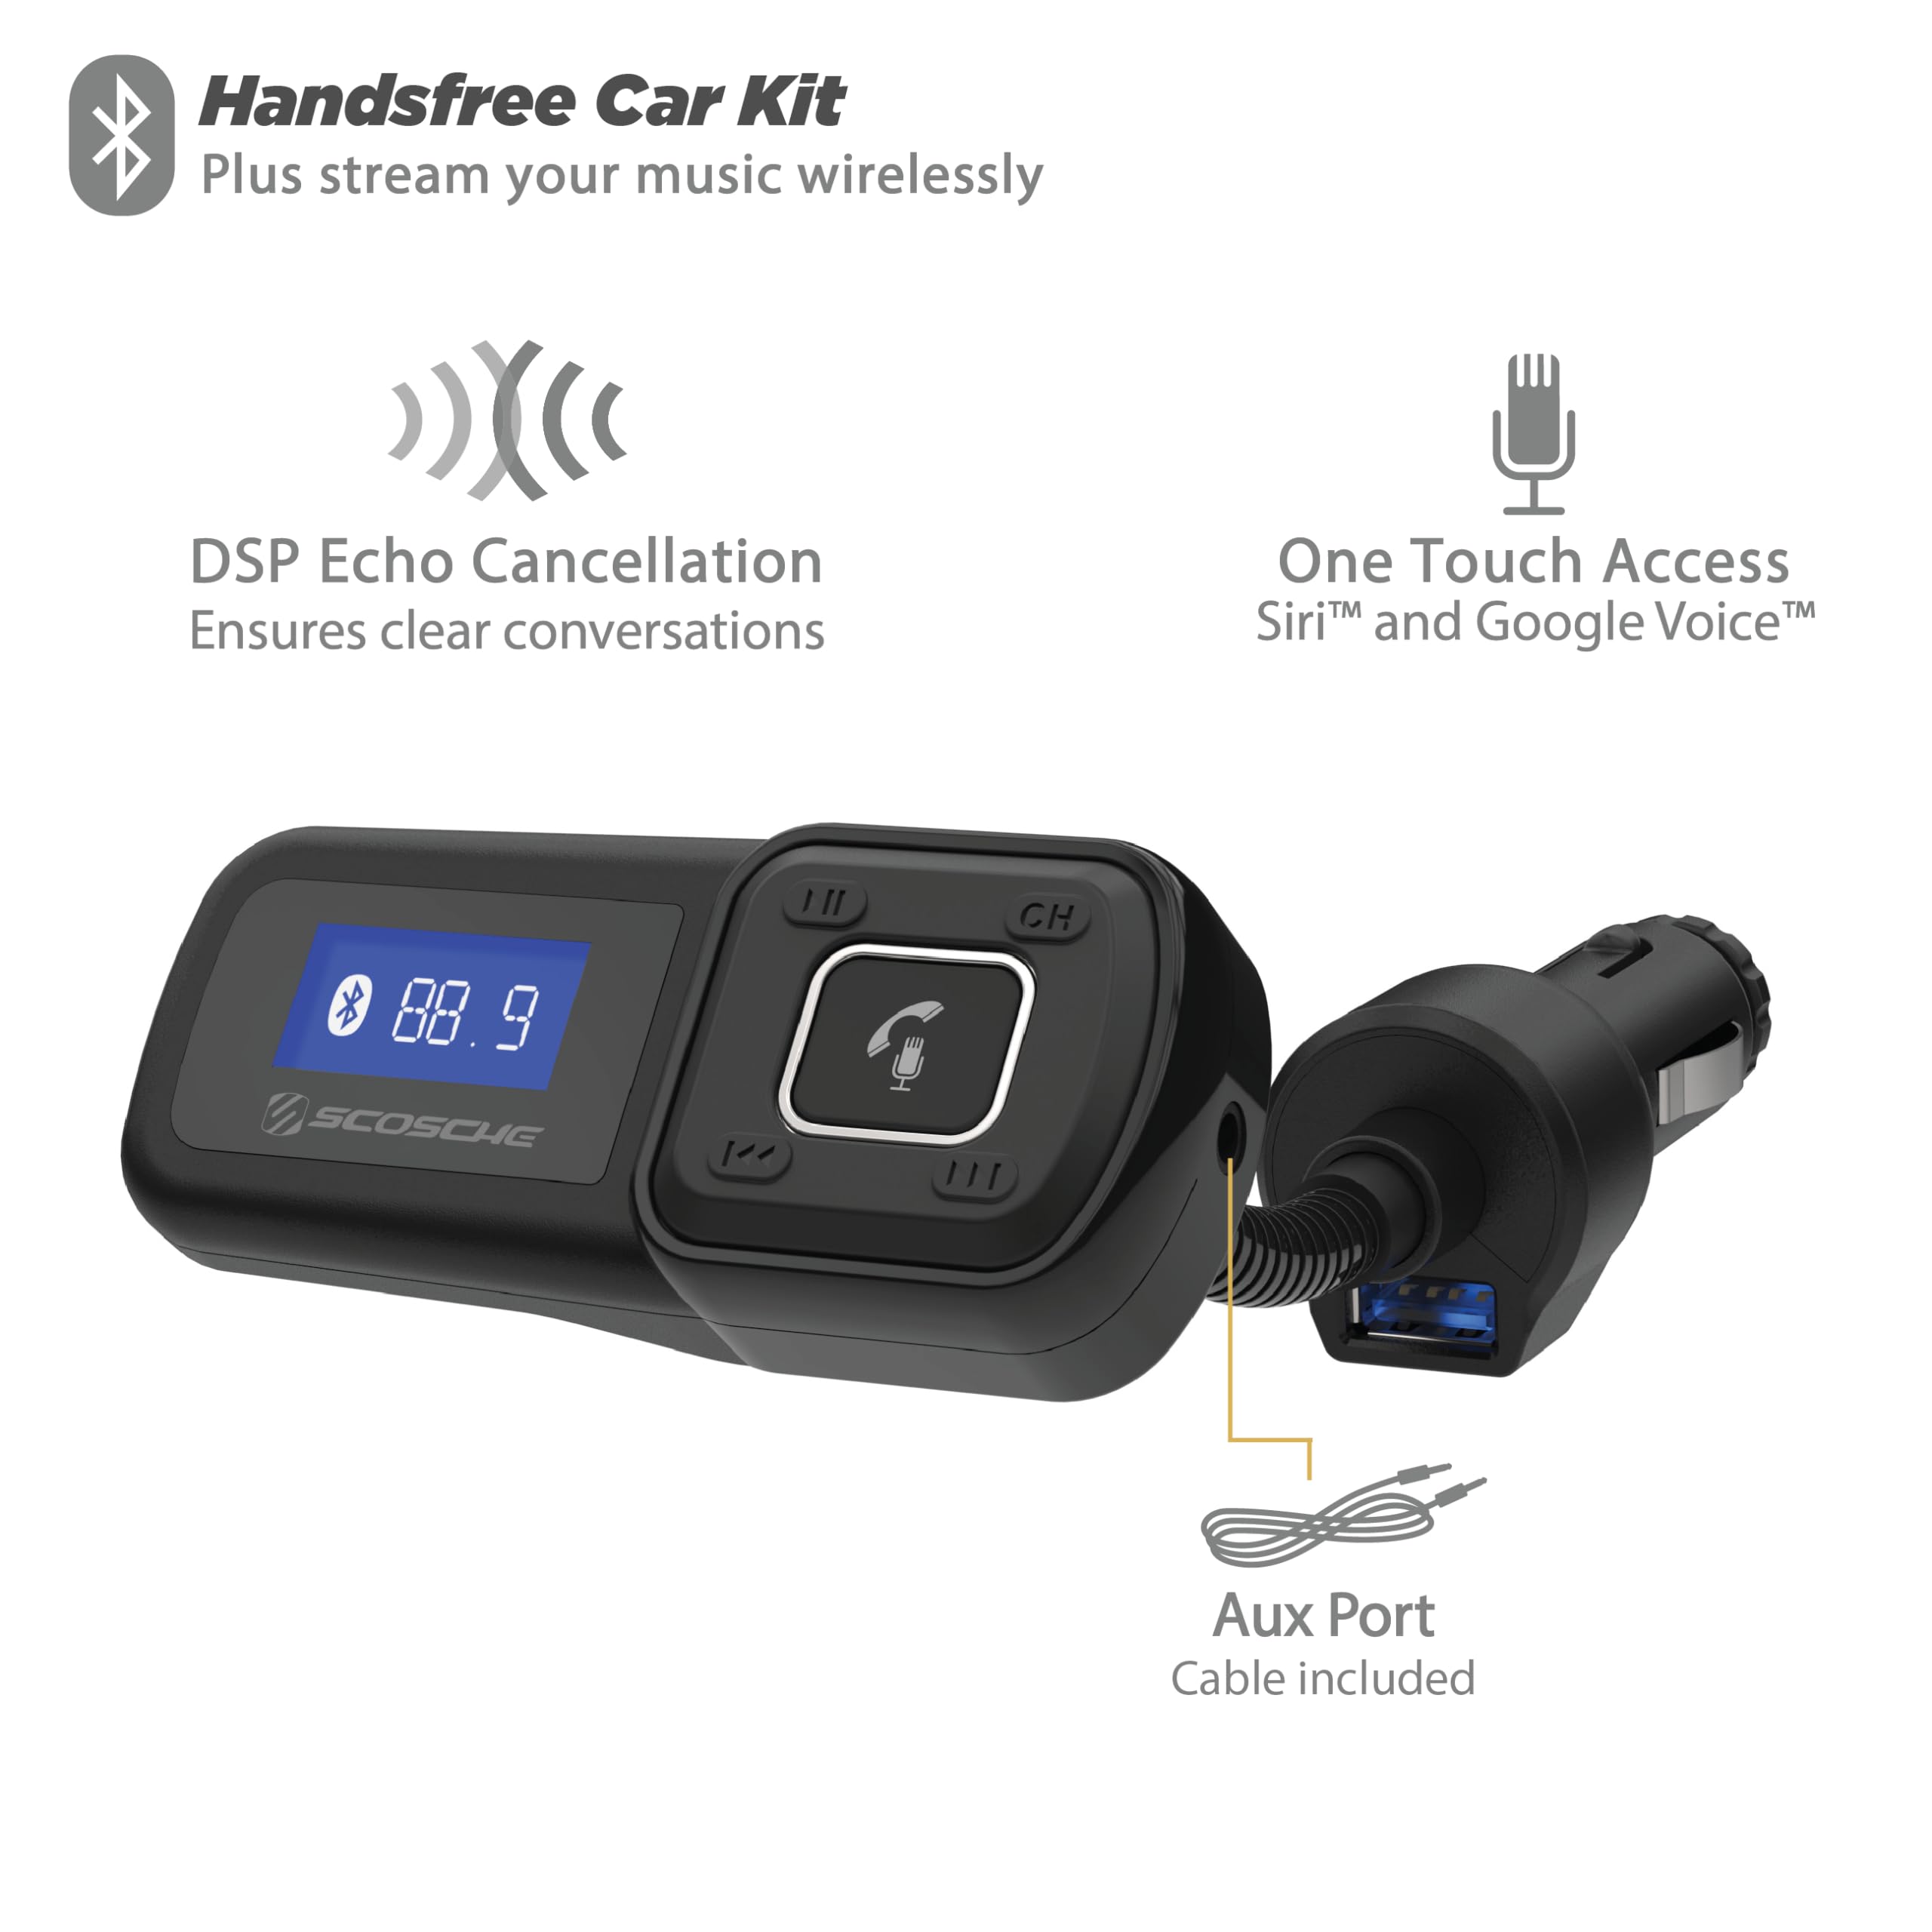 Scosche BTFM2A BTFREQ Universal Bluetooth Hands-Free Car Kit with Digital FM Transmitter and 10-Watt USB Car Charger, Stream Smartphone Audio